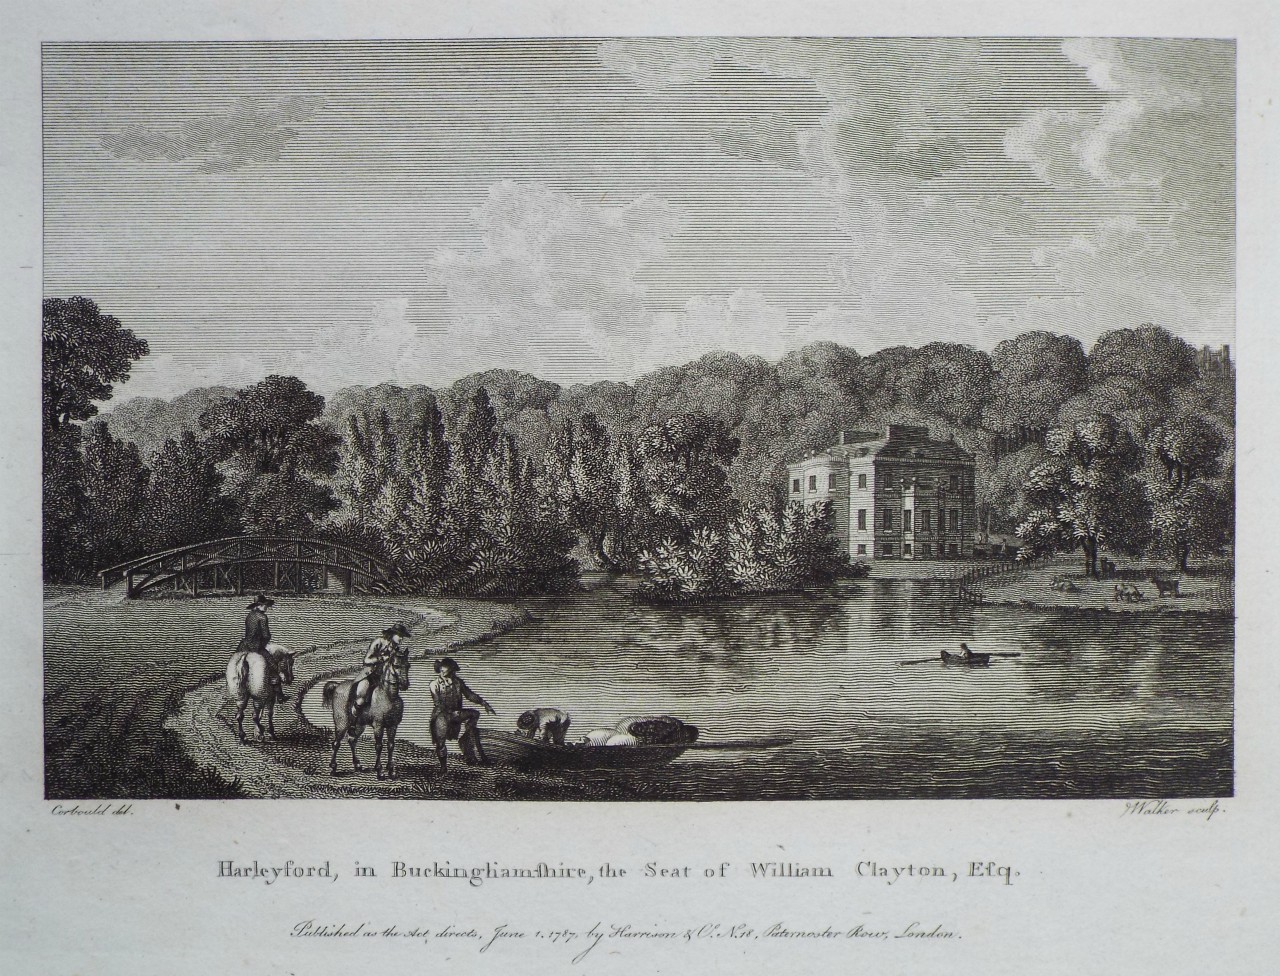 Print - Harleyford, in Buckinghamshire, the Seat of William Clayton, Esq. - 